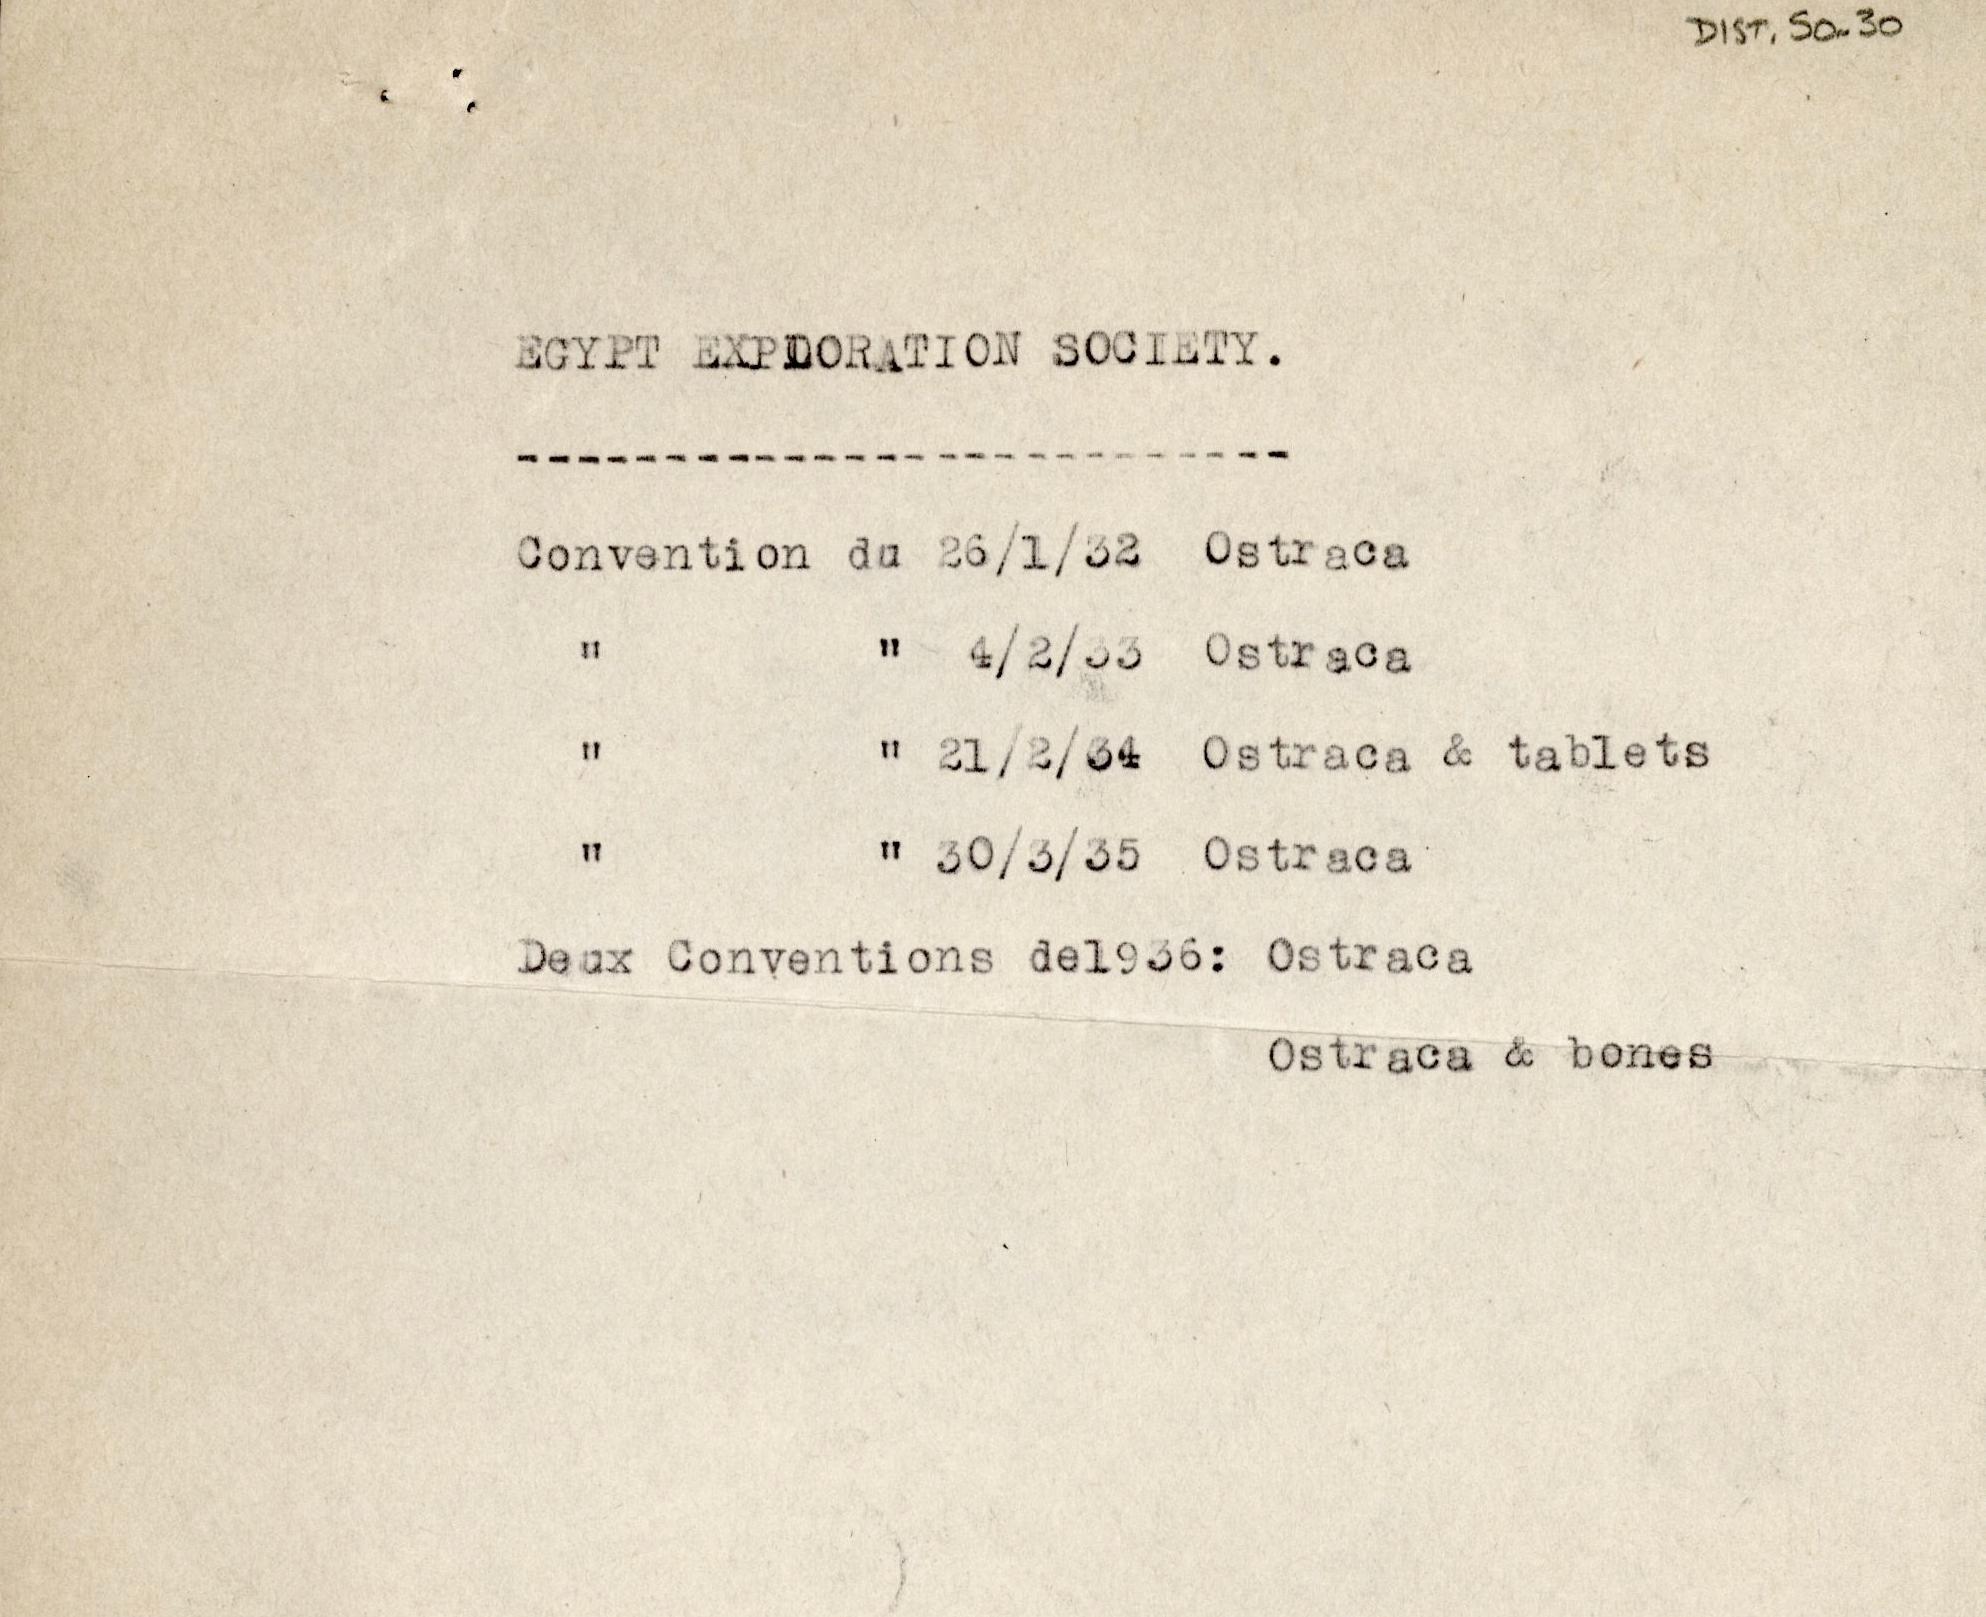 1926-39 correspondence with Antiquities Service DIST.50.30